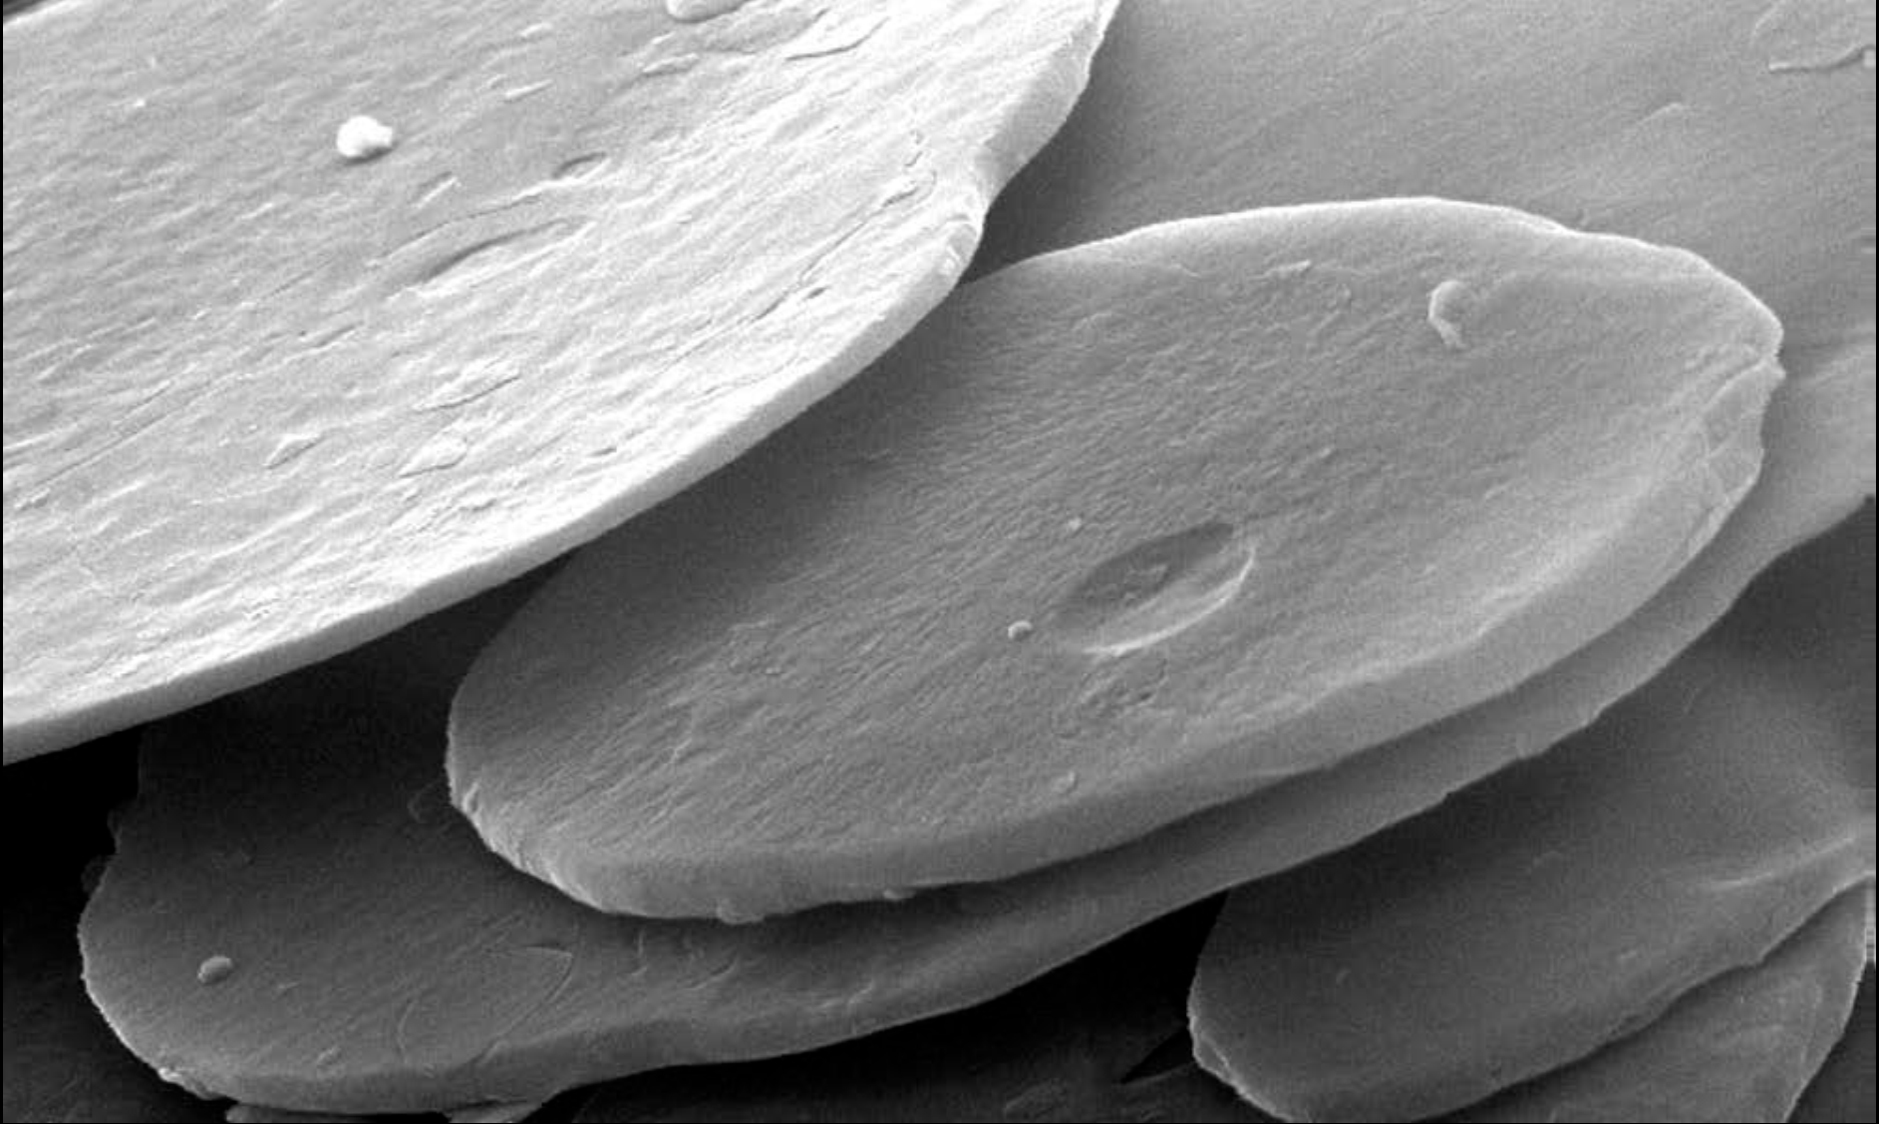 A close up of the aluminum flake found in aluminum paste.